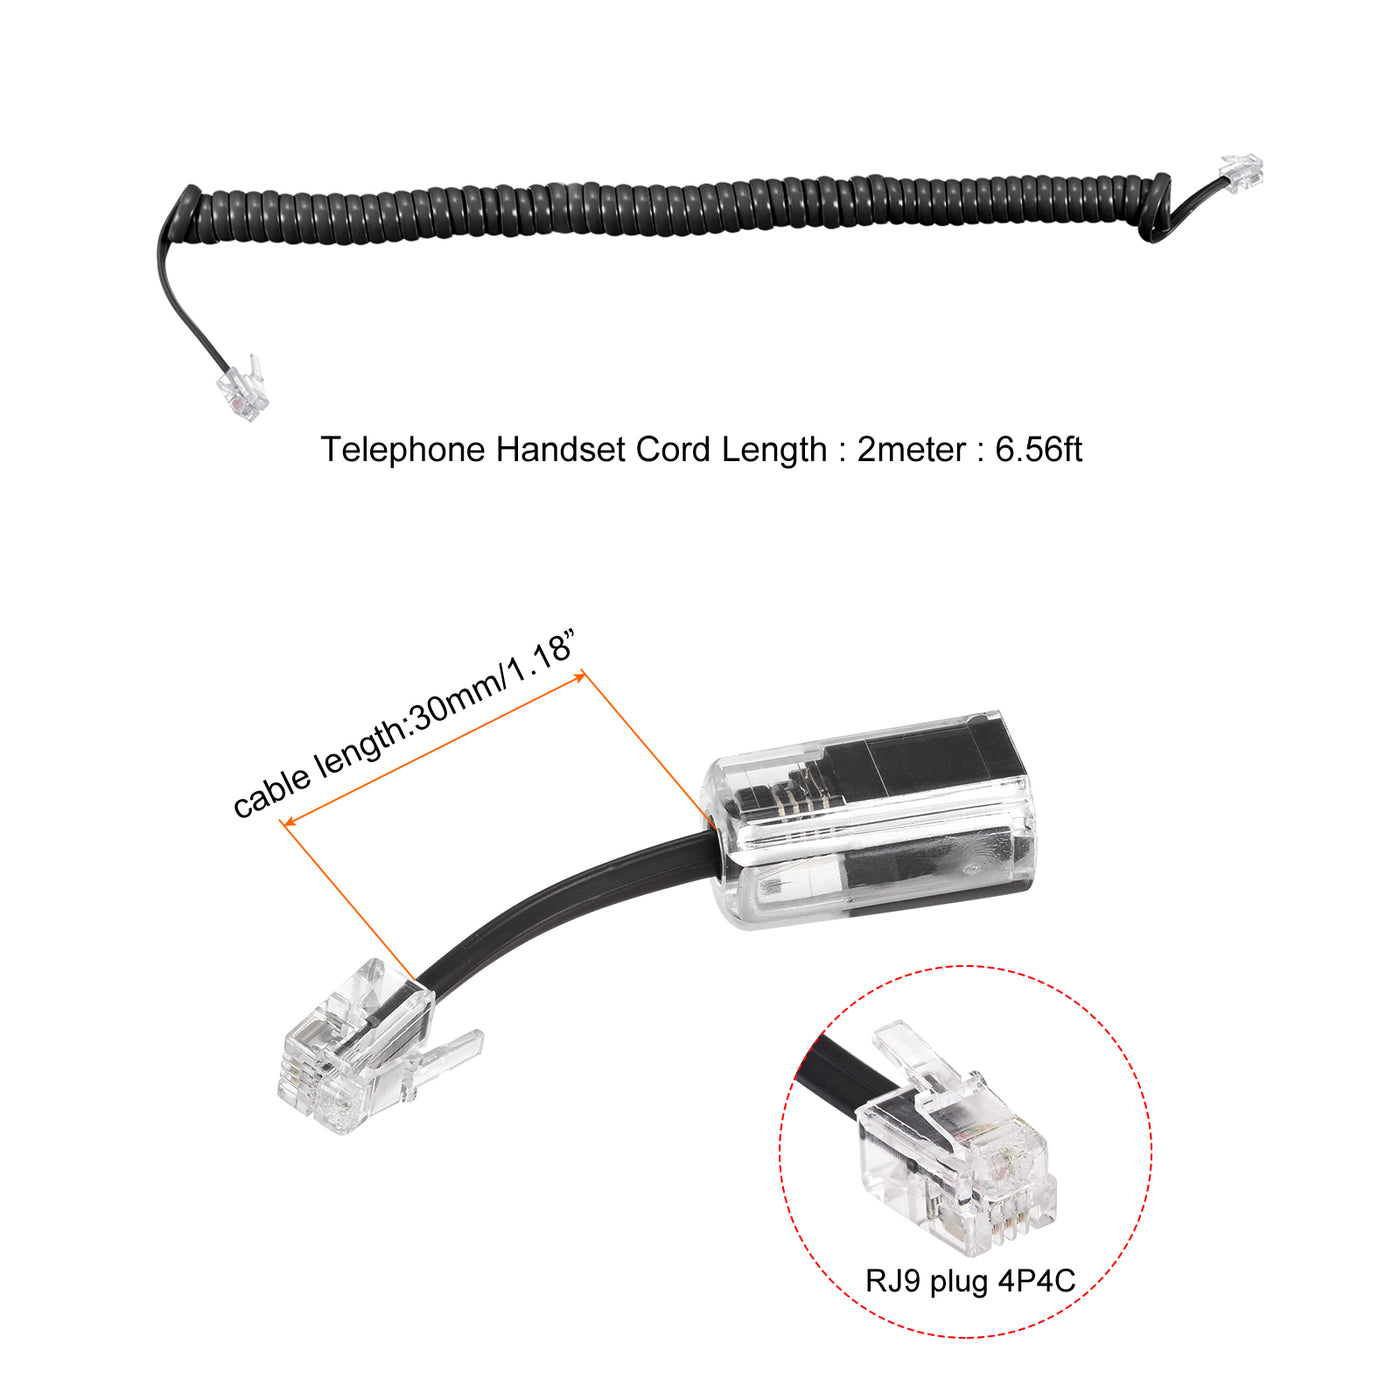 Harfington Telephone Cord Detangler 360 Degree Rotating Landline Cable with Telephone Handset Cord